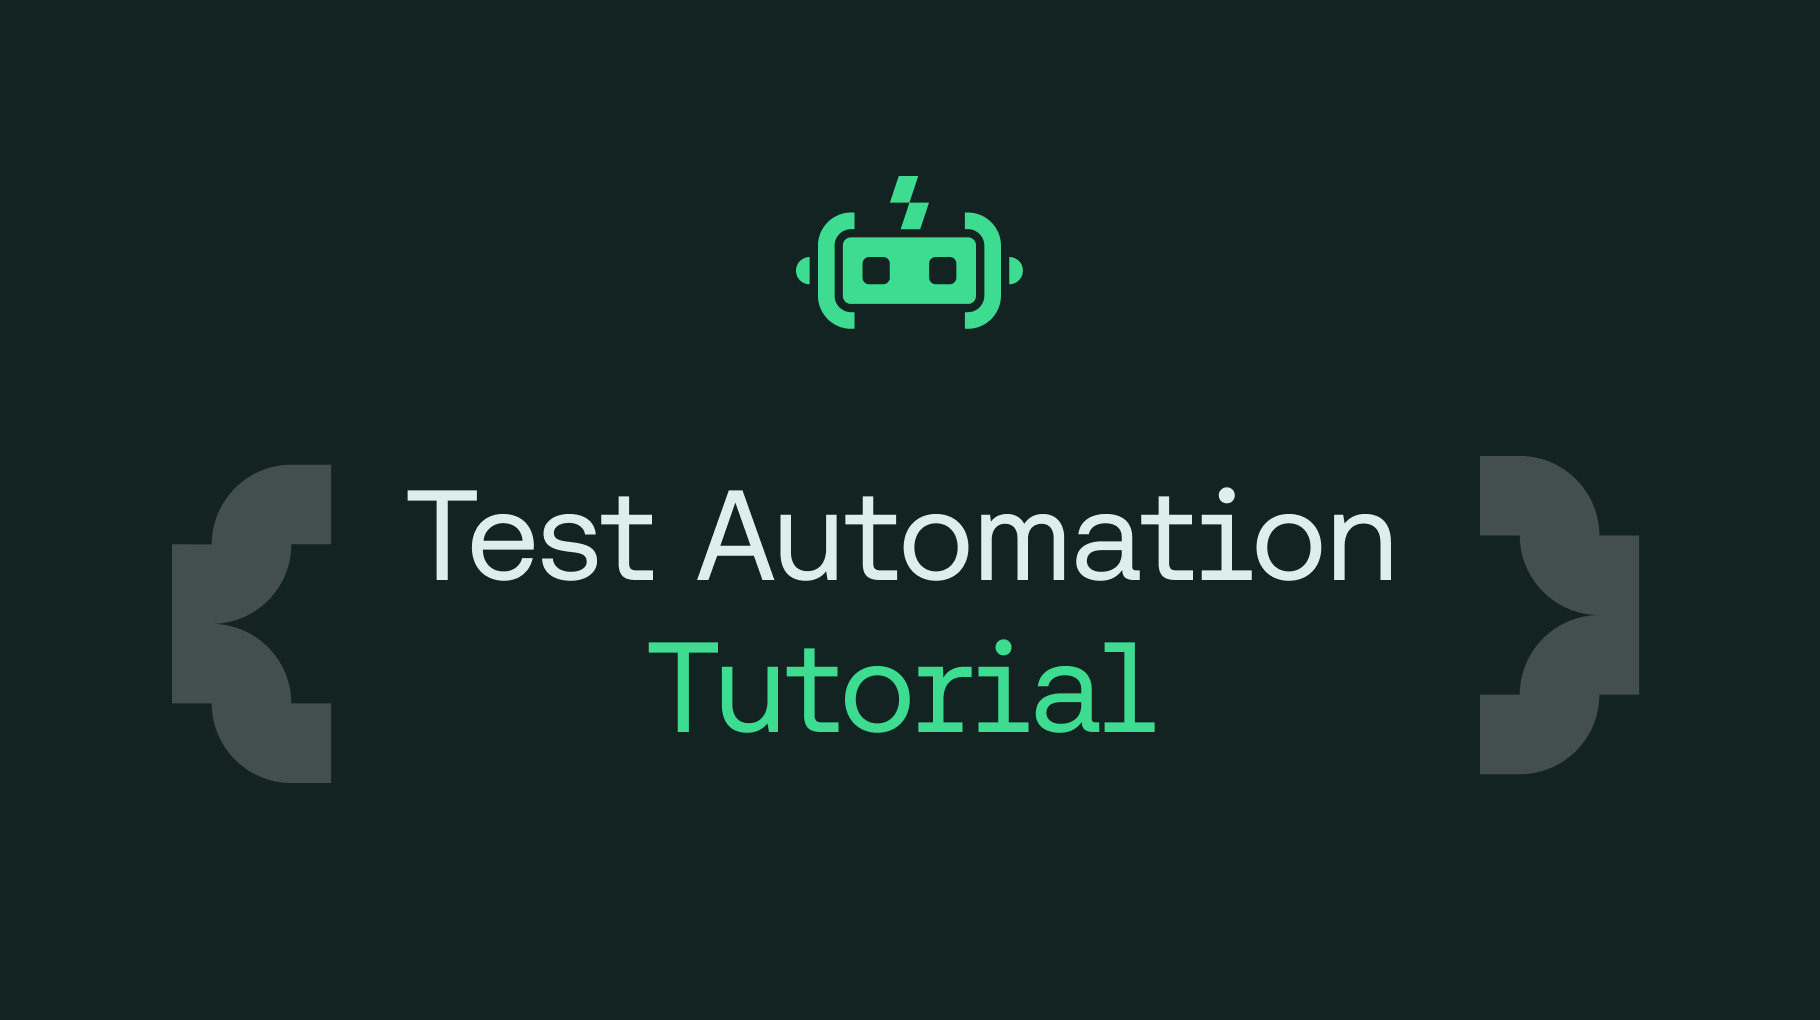 Test Automation Tutorial Blog